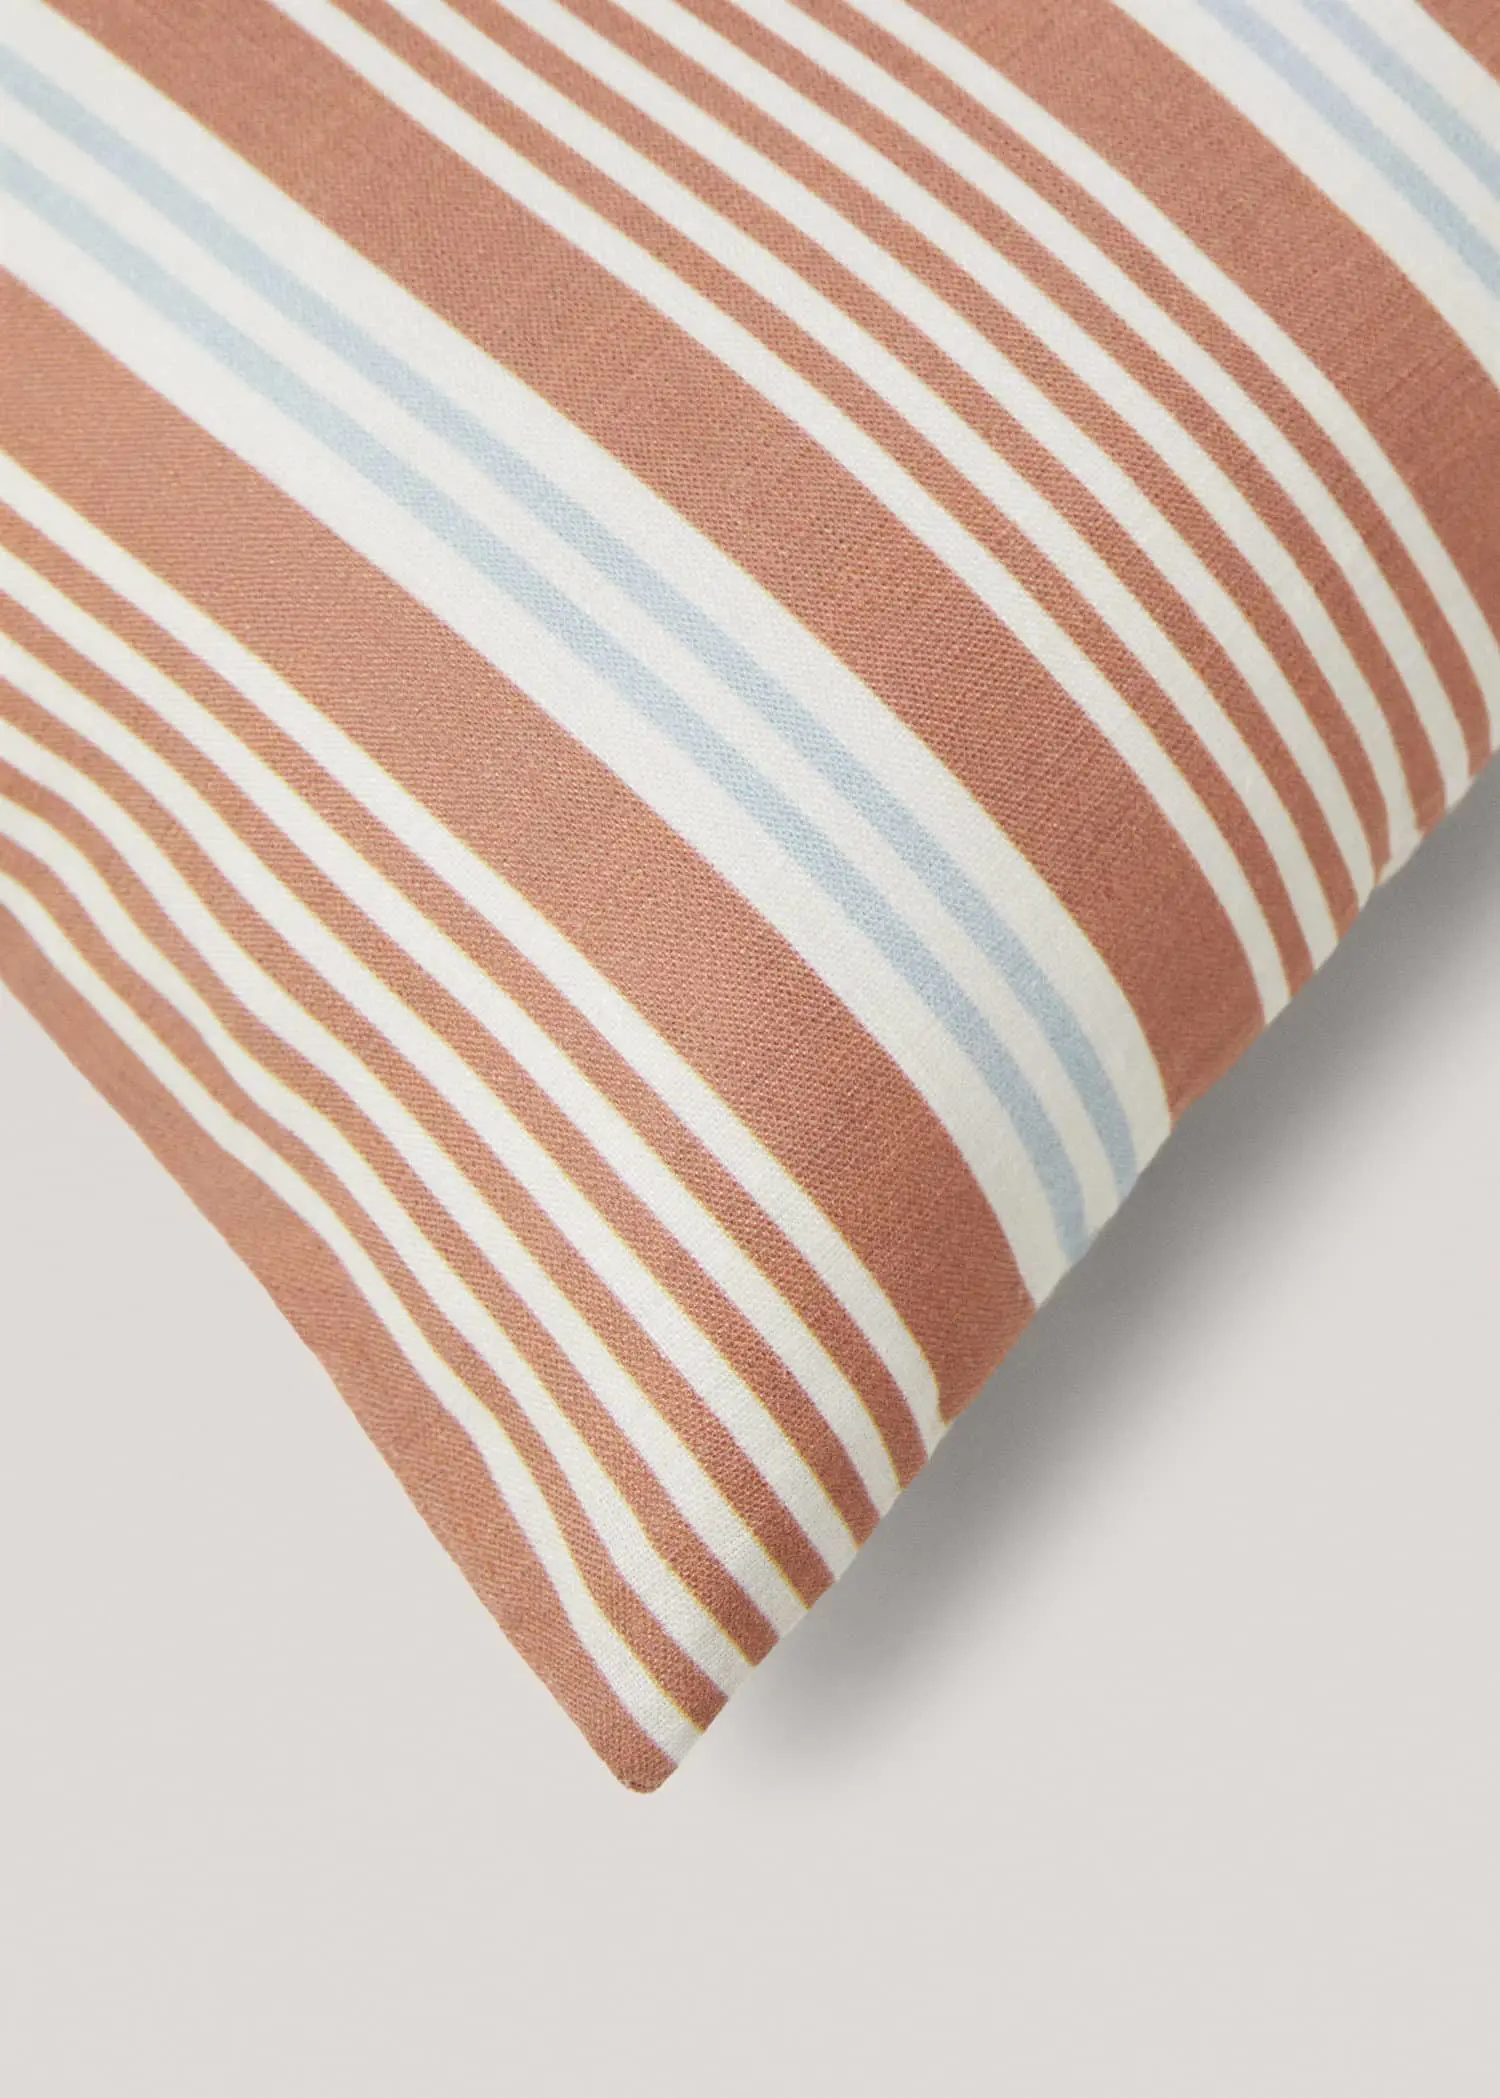 Mango Linen woven striped cushion cover 30x50cm. 3